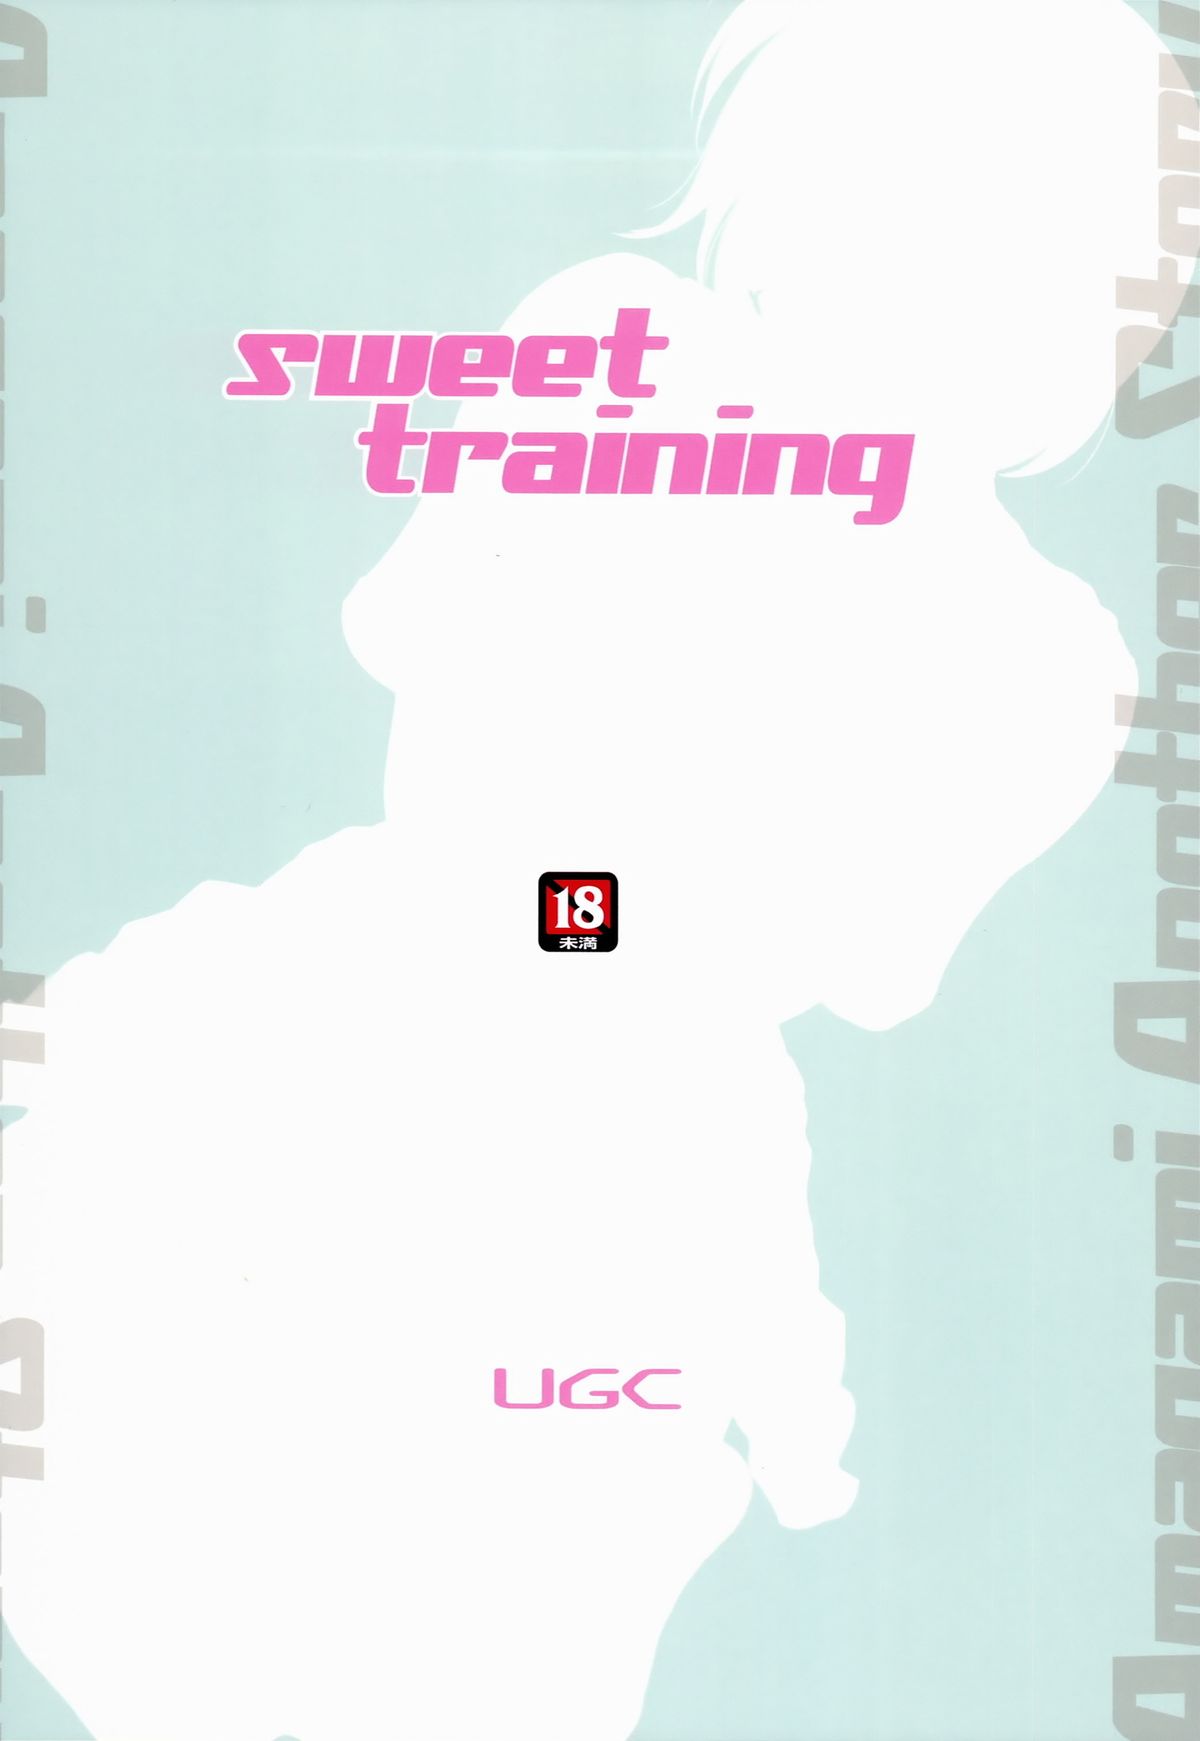 (C86) [UGC (ささきあきら)] sweet training ~X IN THE INFIRMARY~ (アマガミ) [英訳]